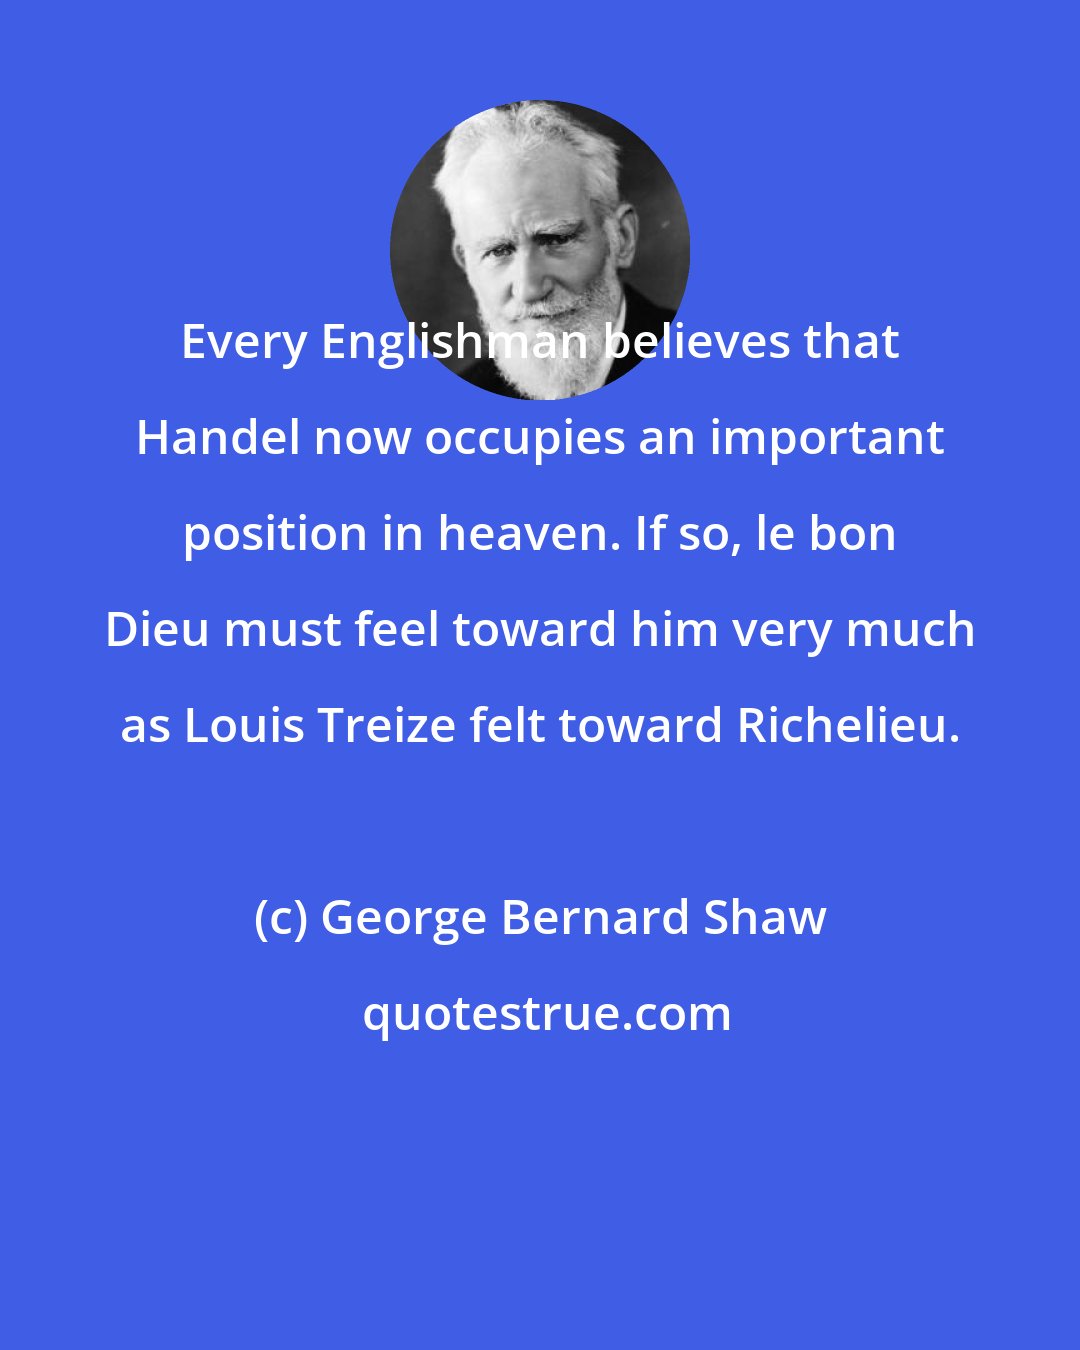 George Bernard Shaw: Every Englishman believes that Handel now occupies an important position in heaven. If so, le bon Dieu must feel toward him very much as Louis Treize felt toward Richelieu.